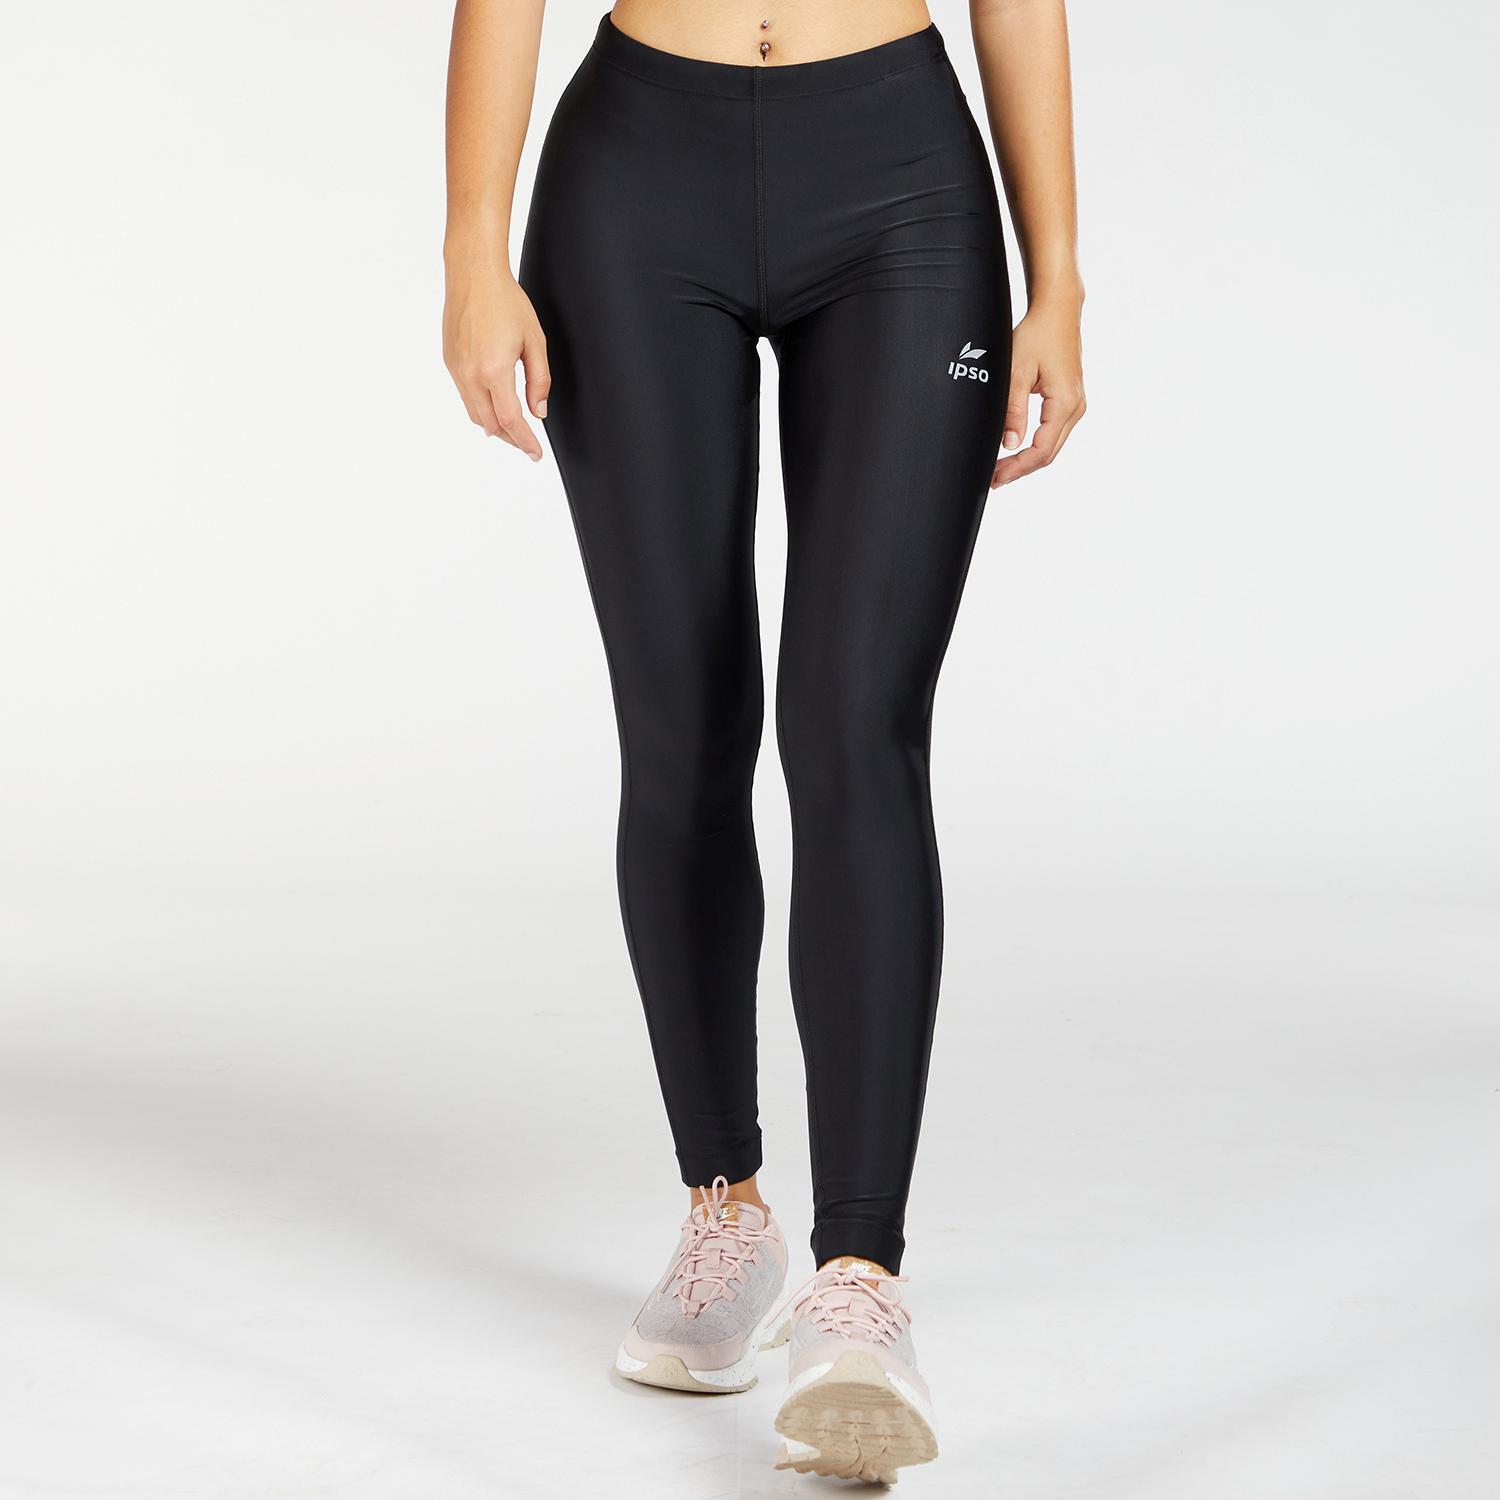 Collants Long Running Ipso Basic - Noir - Collants Femme sports taille M